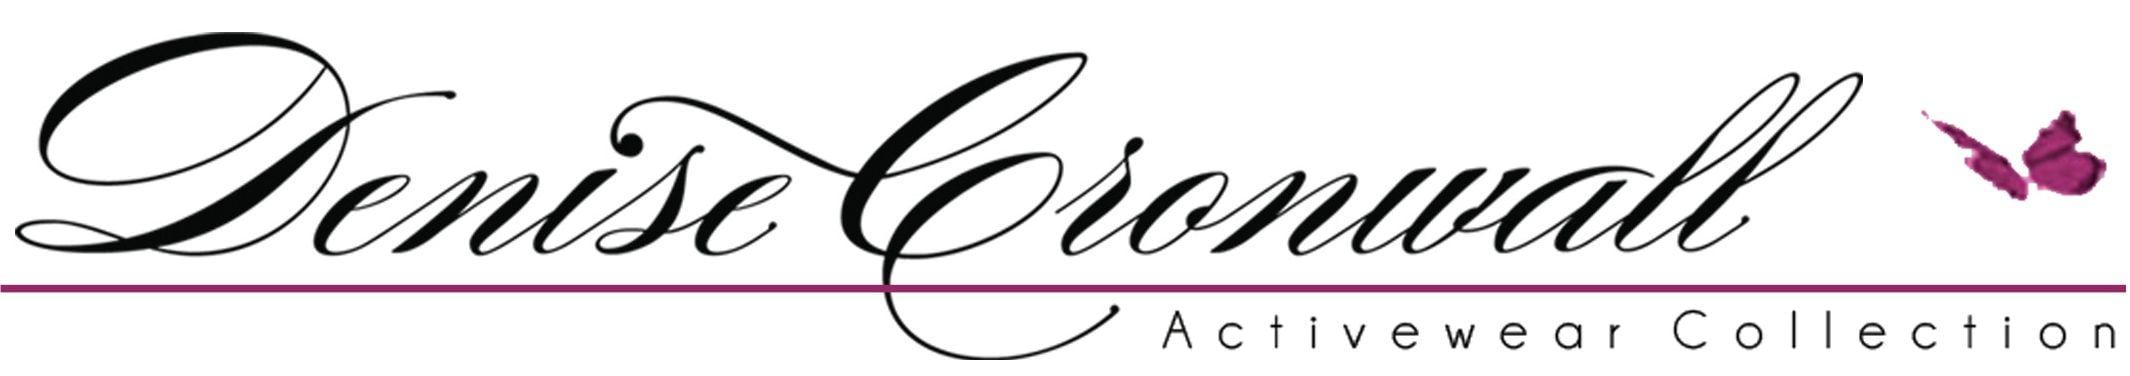 Denise Logo - Women's Tennis, Golf & Fitness Apparel | Denise Cronwall Activewear